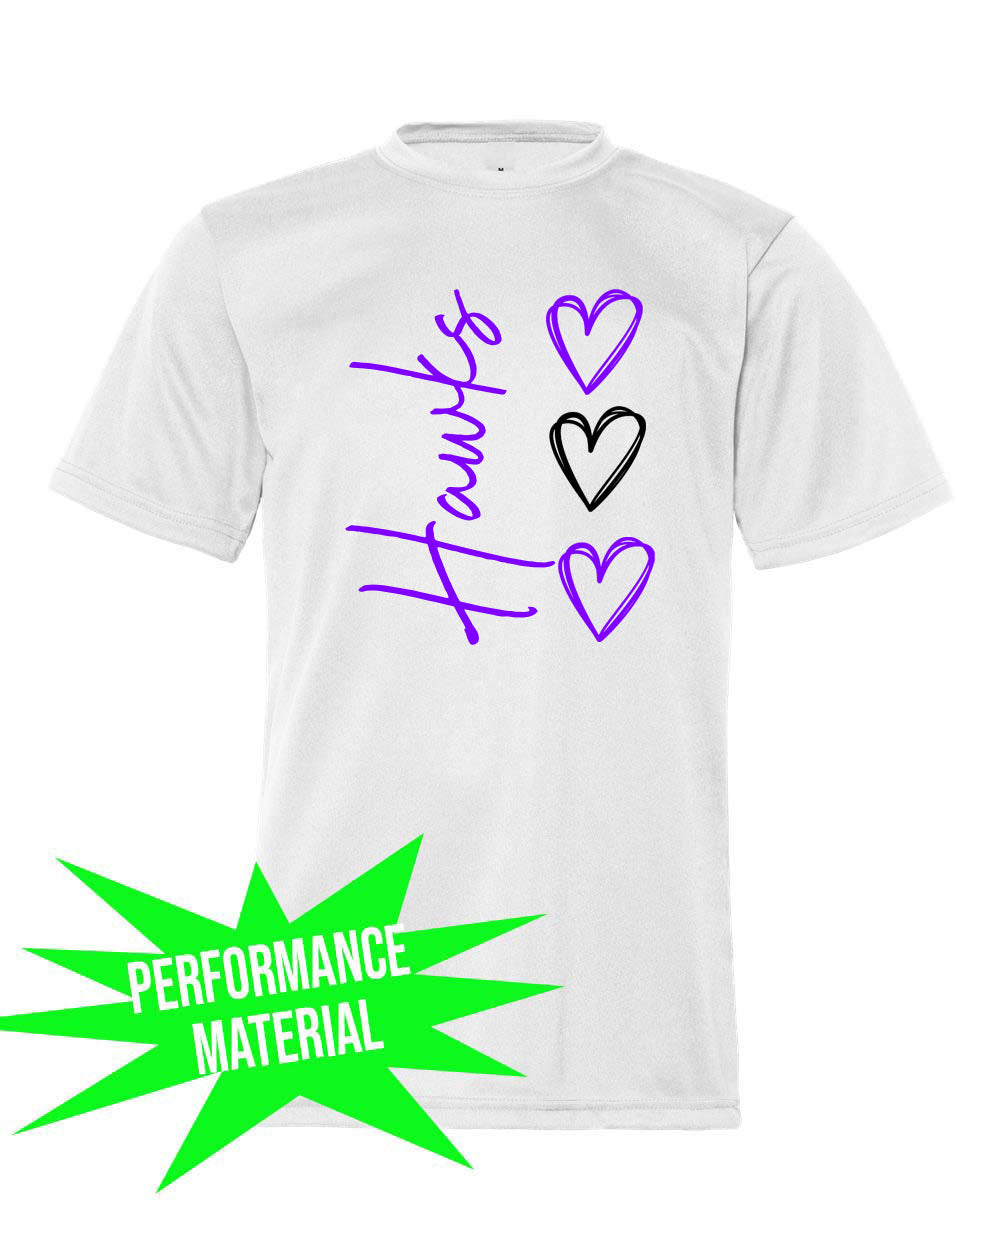 McKeown Performance Material design 16 T-Shirt